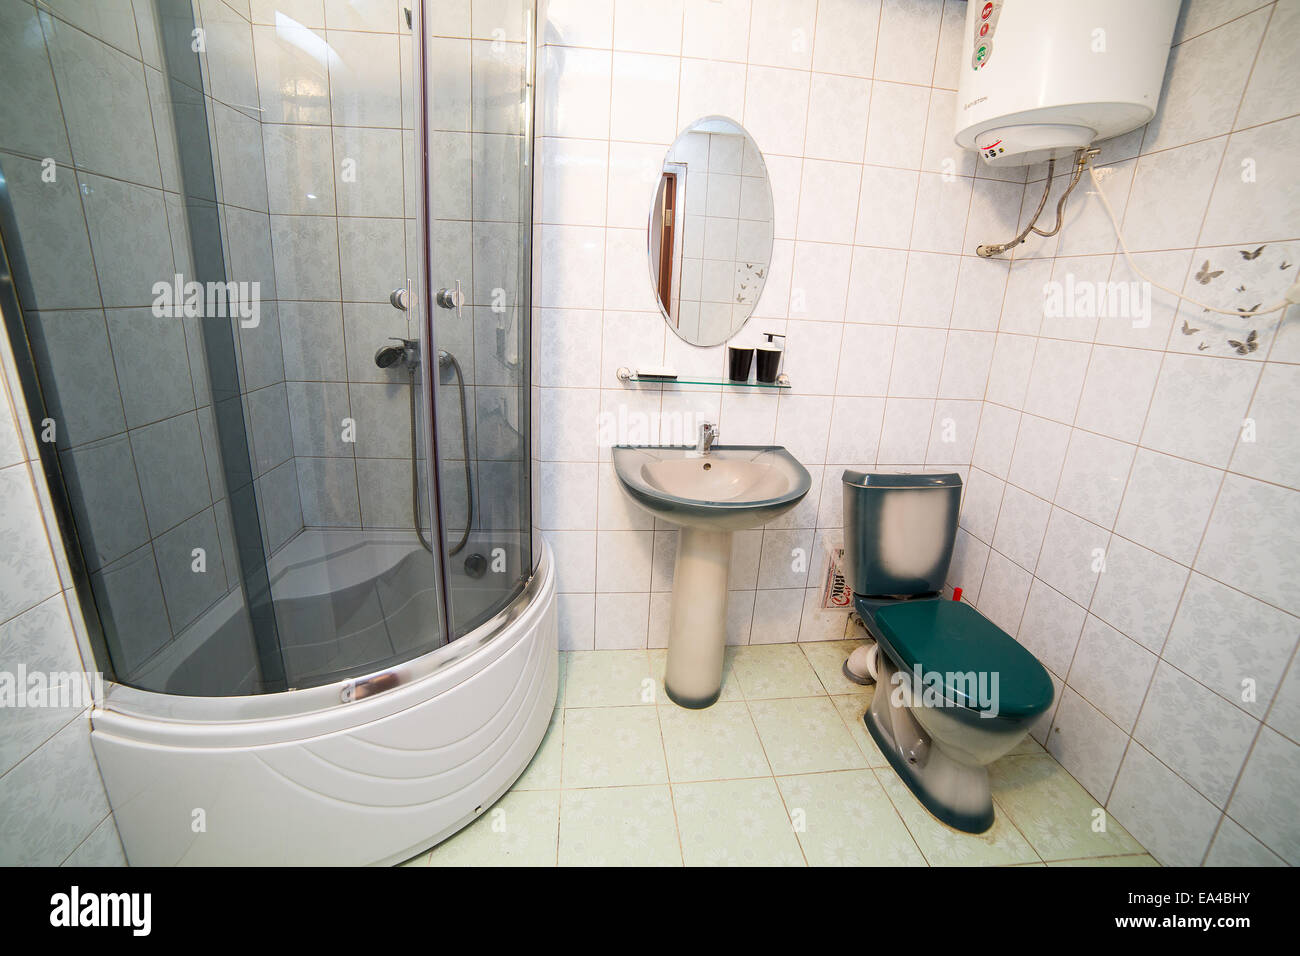 Bathroom, WC, toilet, lavatory room interior design Stock Photo